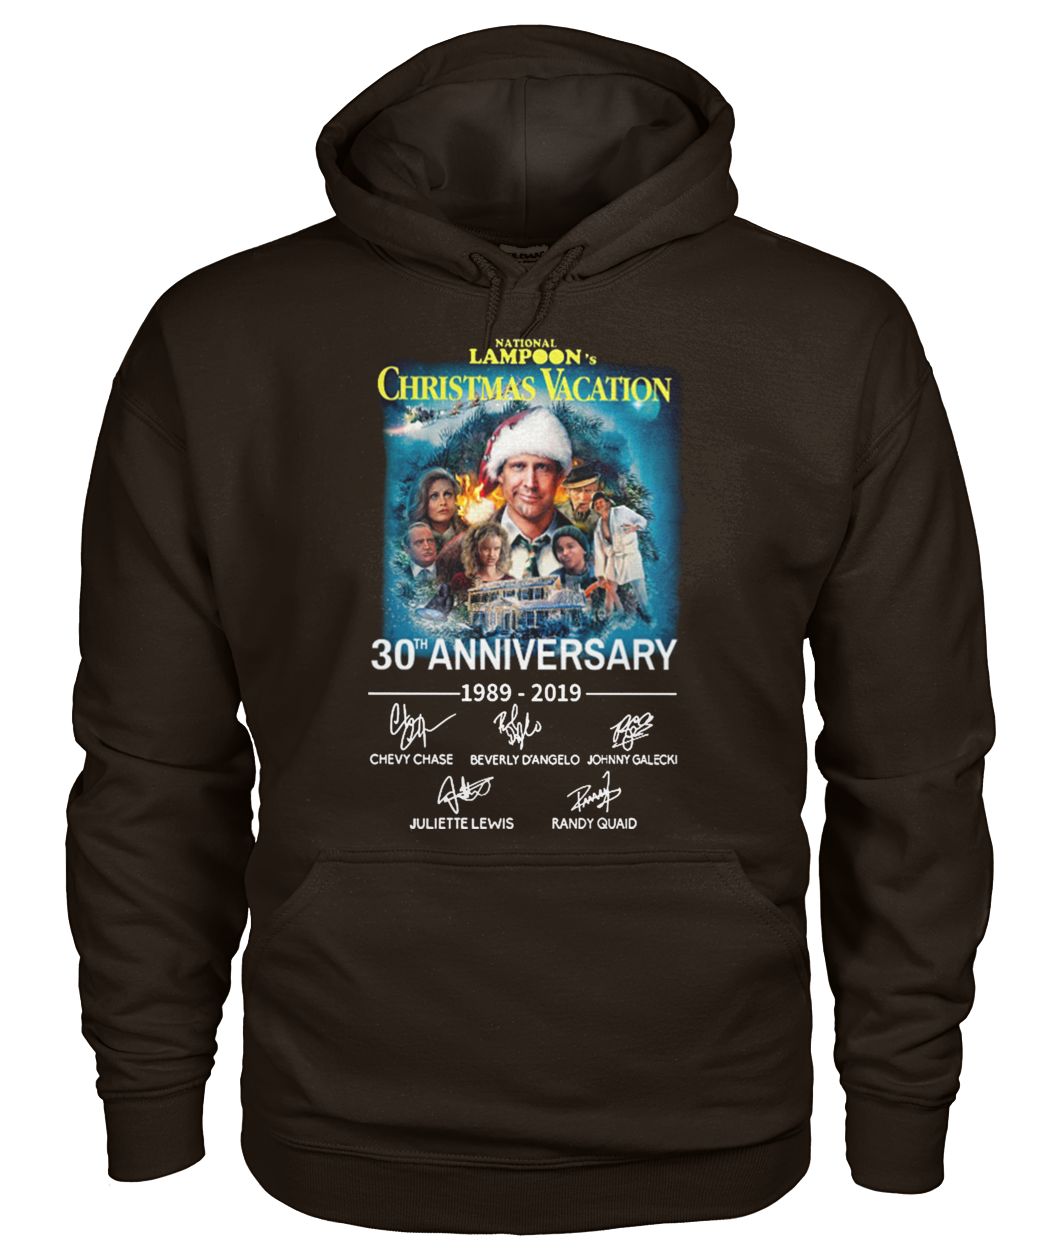 National lampoon's christmas vacation 30th anniversary 1989-2019 signatures gildan hoodie